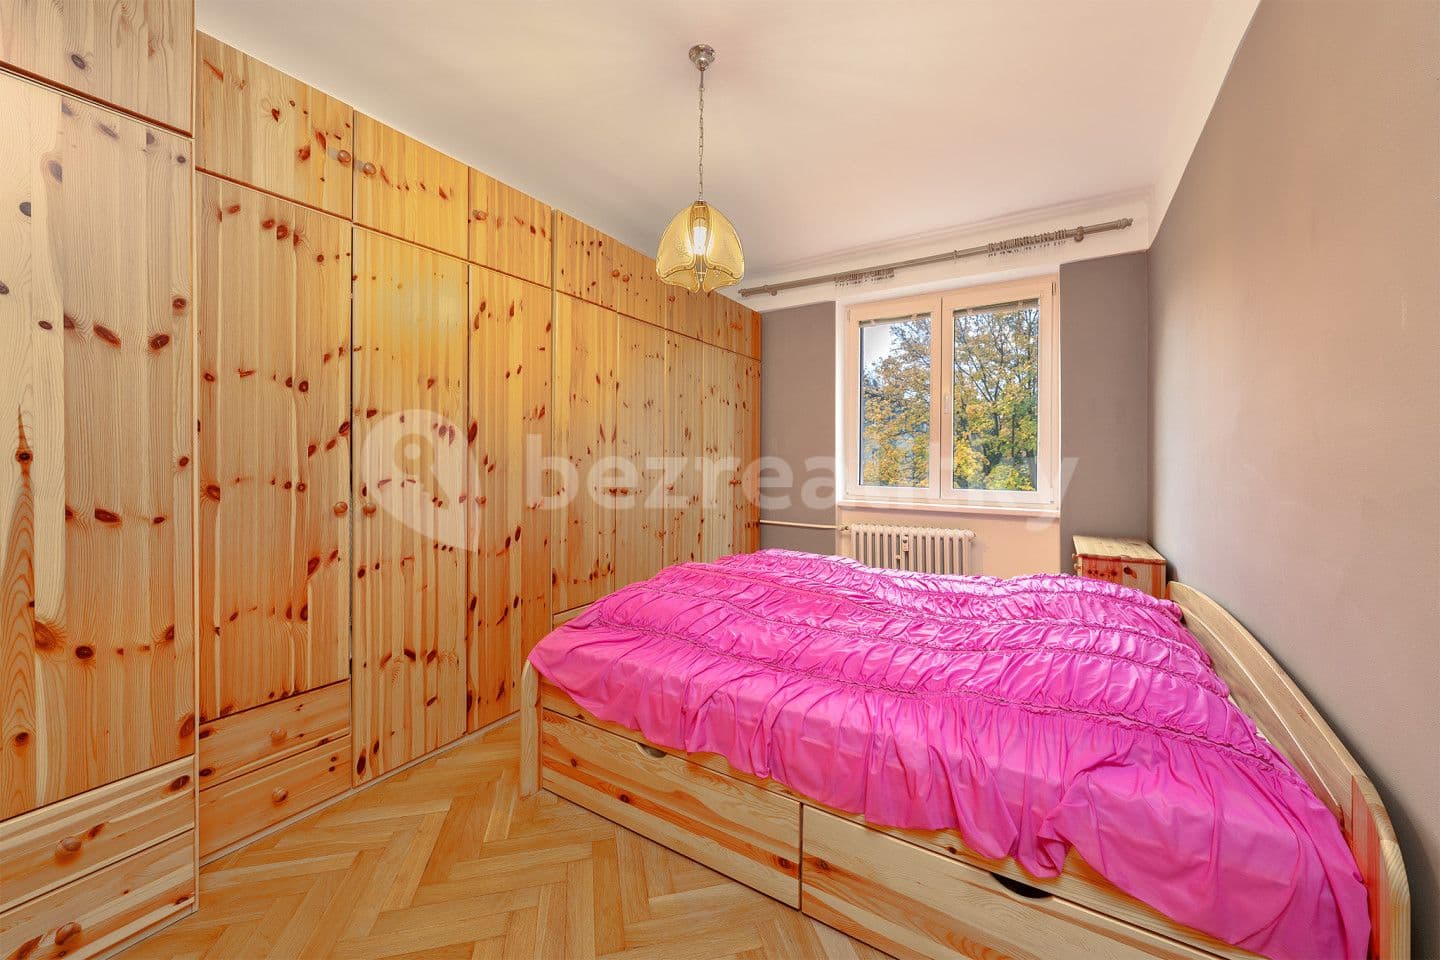 3 bedroom flat for sale, 60 m², Zrenjaninská, Teplice, Ústecký Region